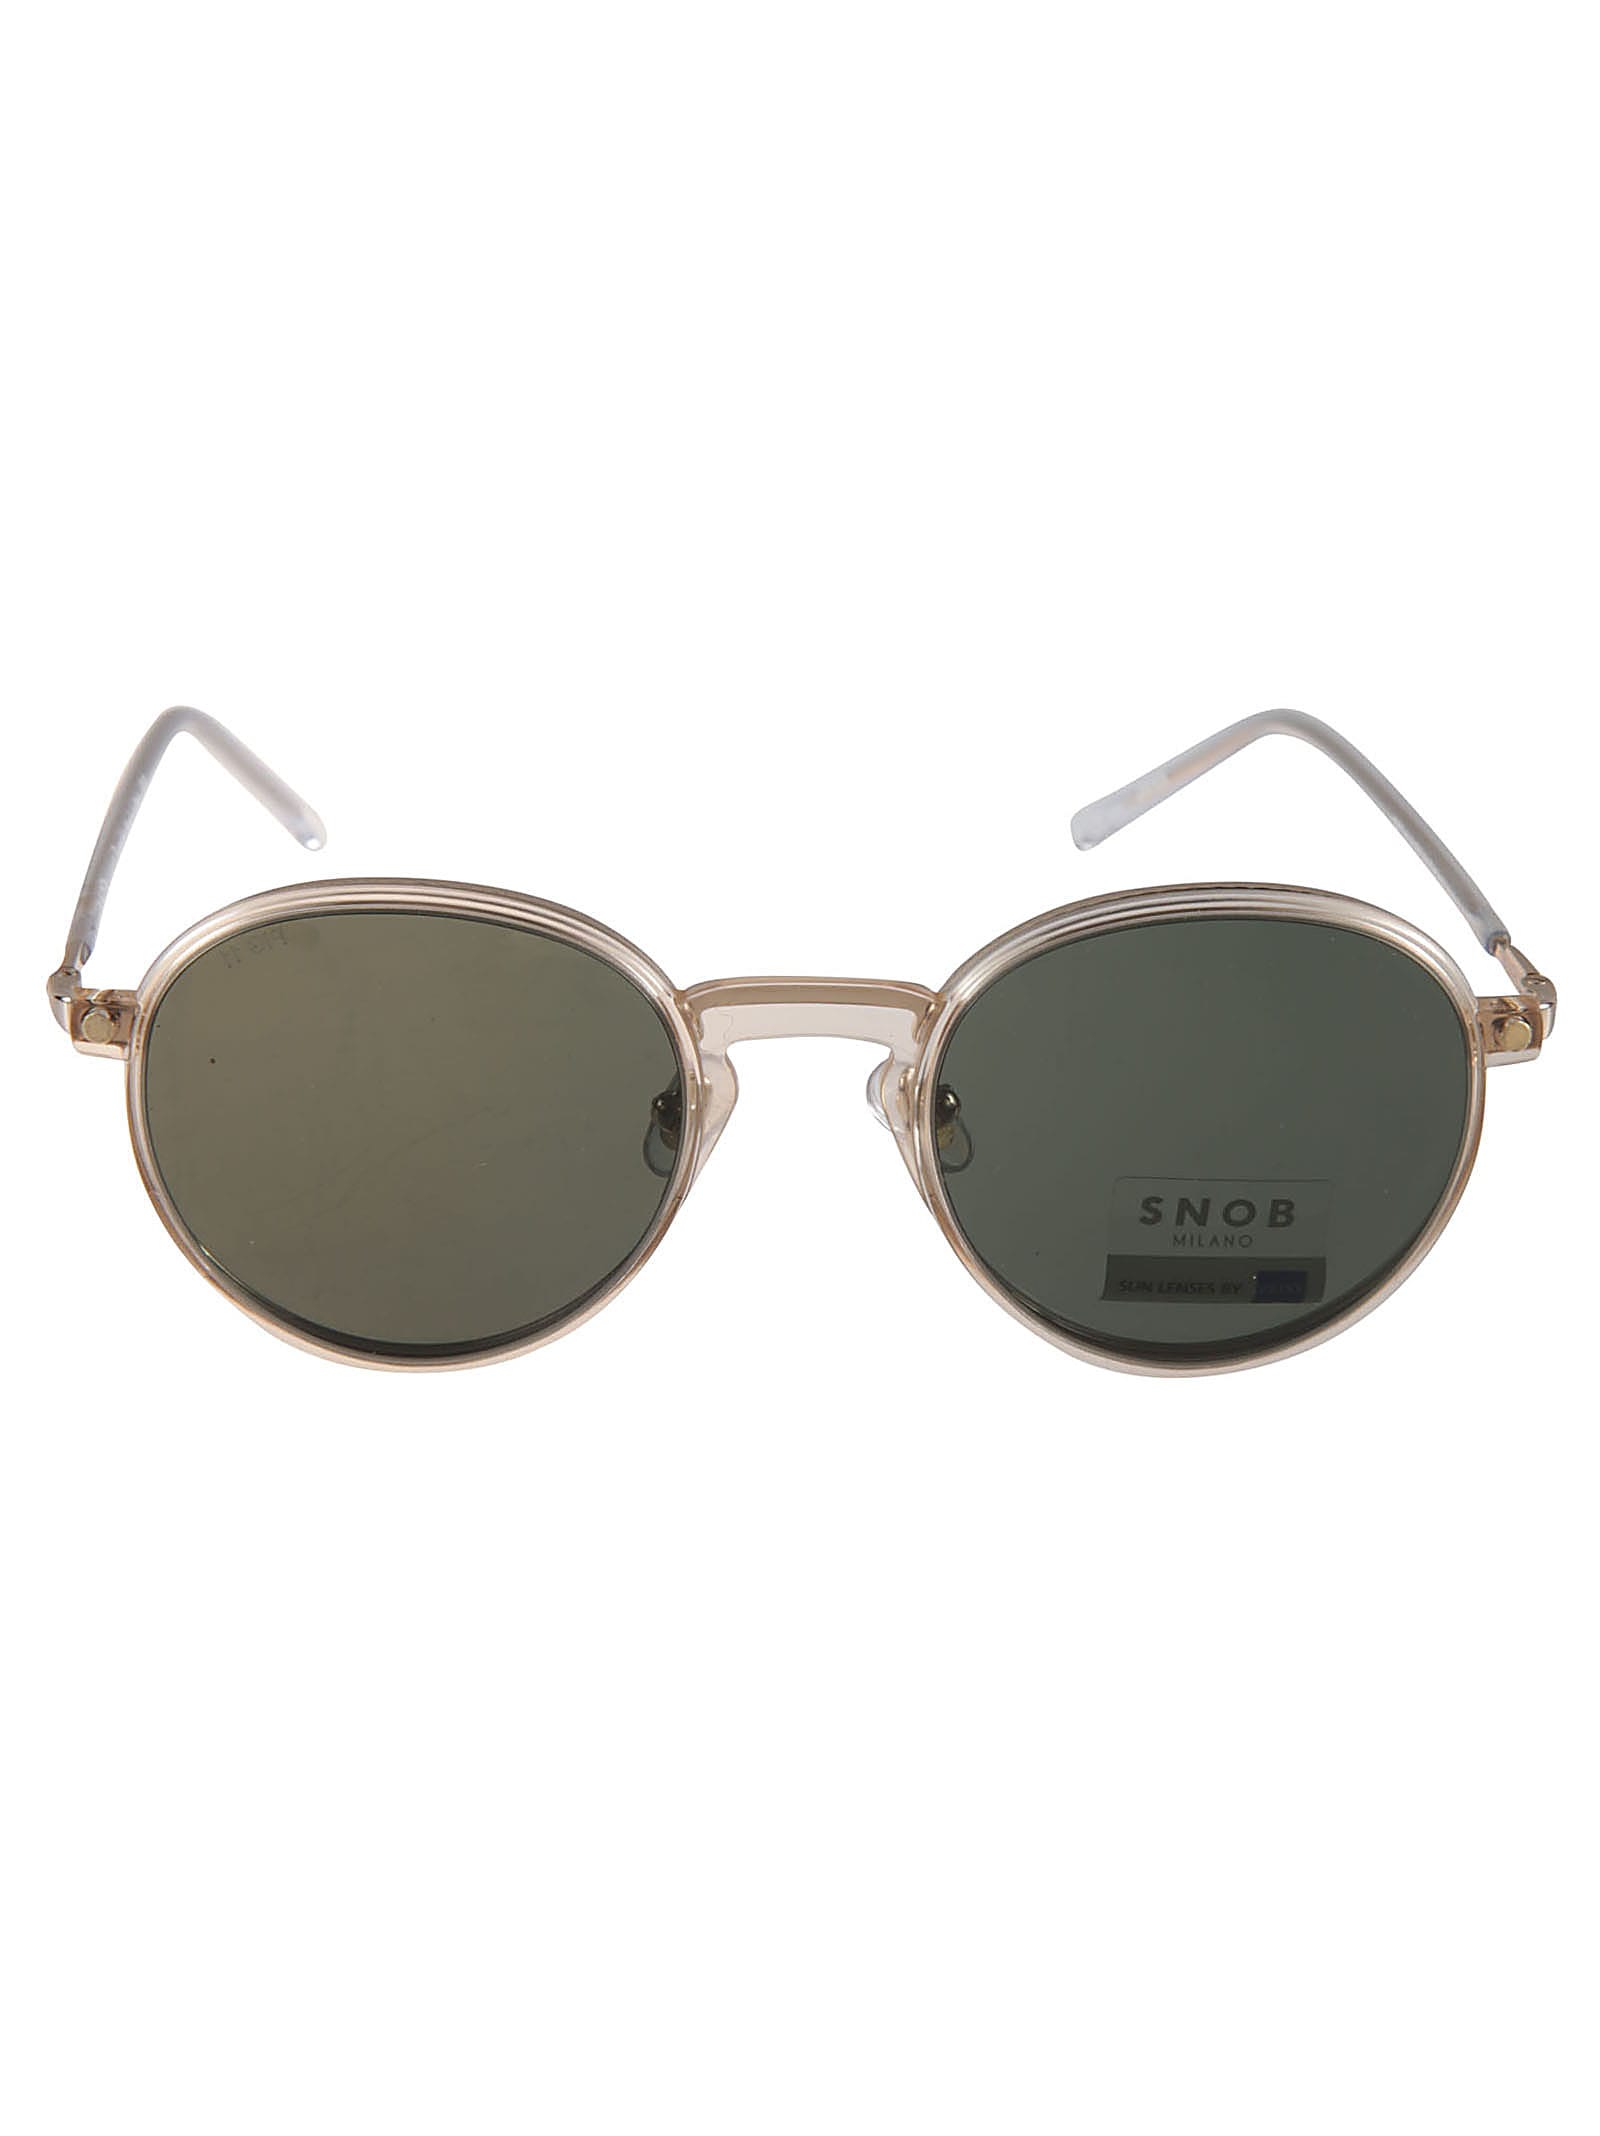 Snob Milano Round Frame Sunglasses